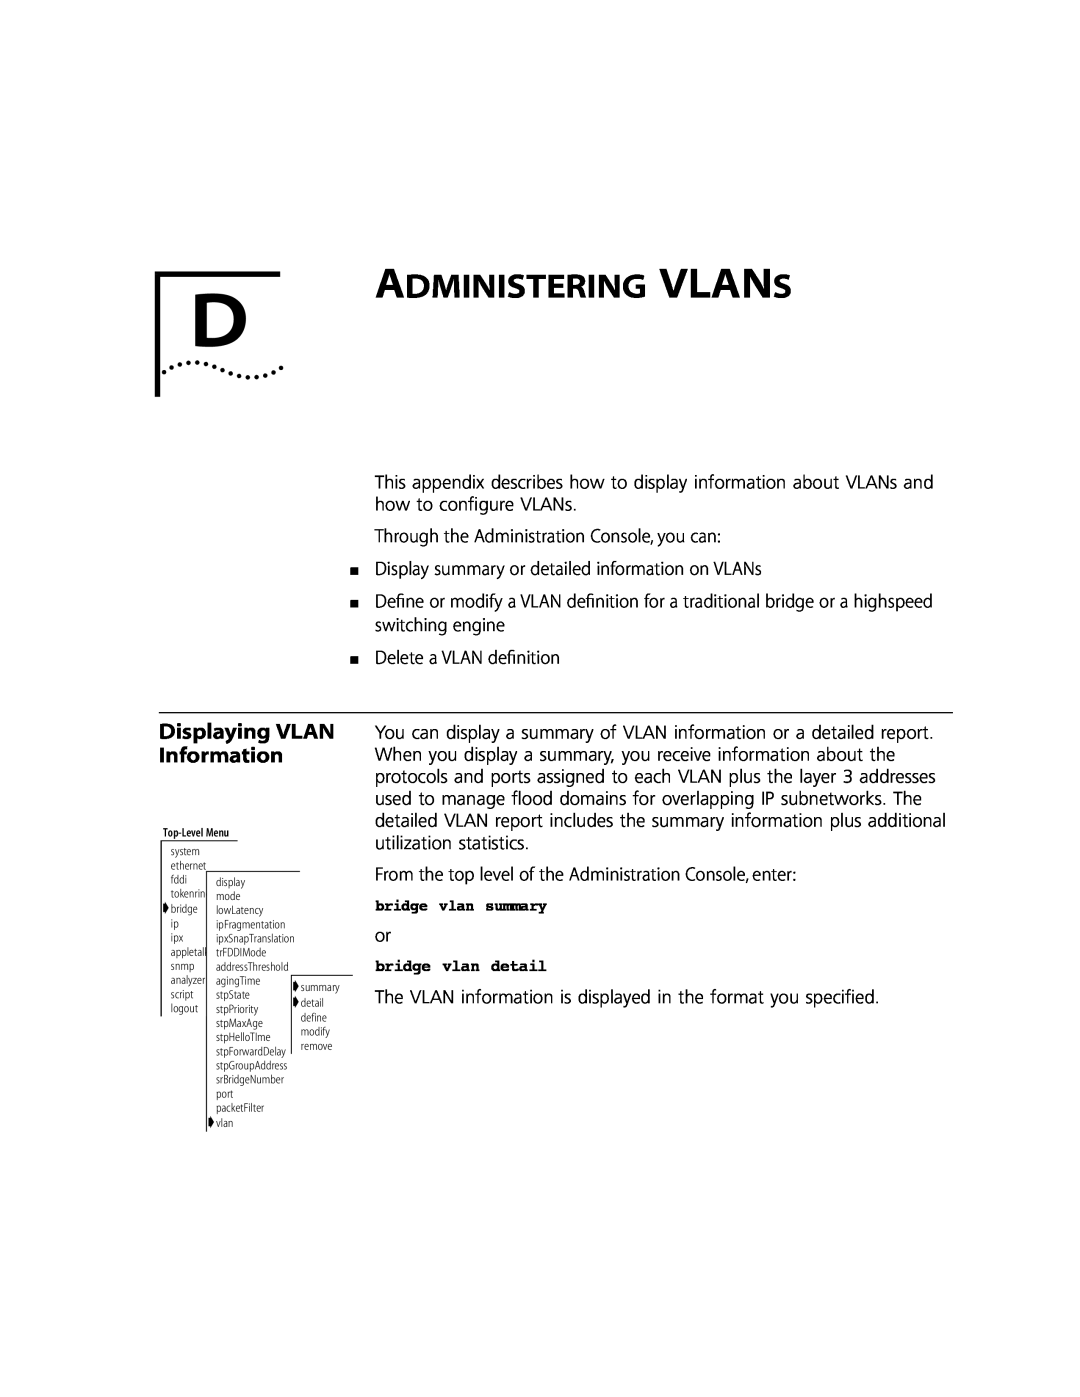 3Com 10002211 manual Administering Vlans, Displaying VLAN Information 